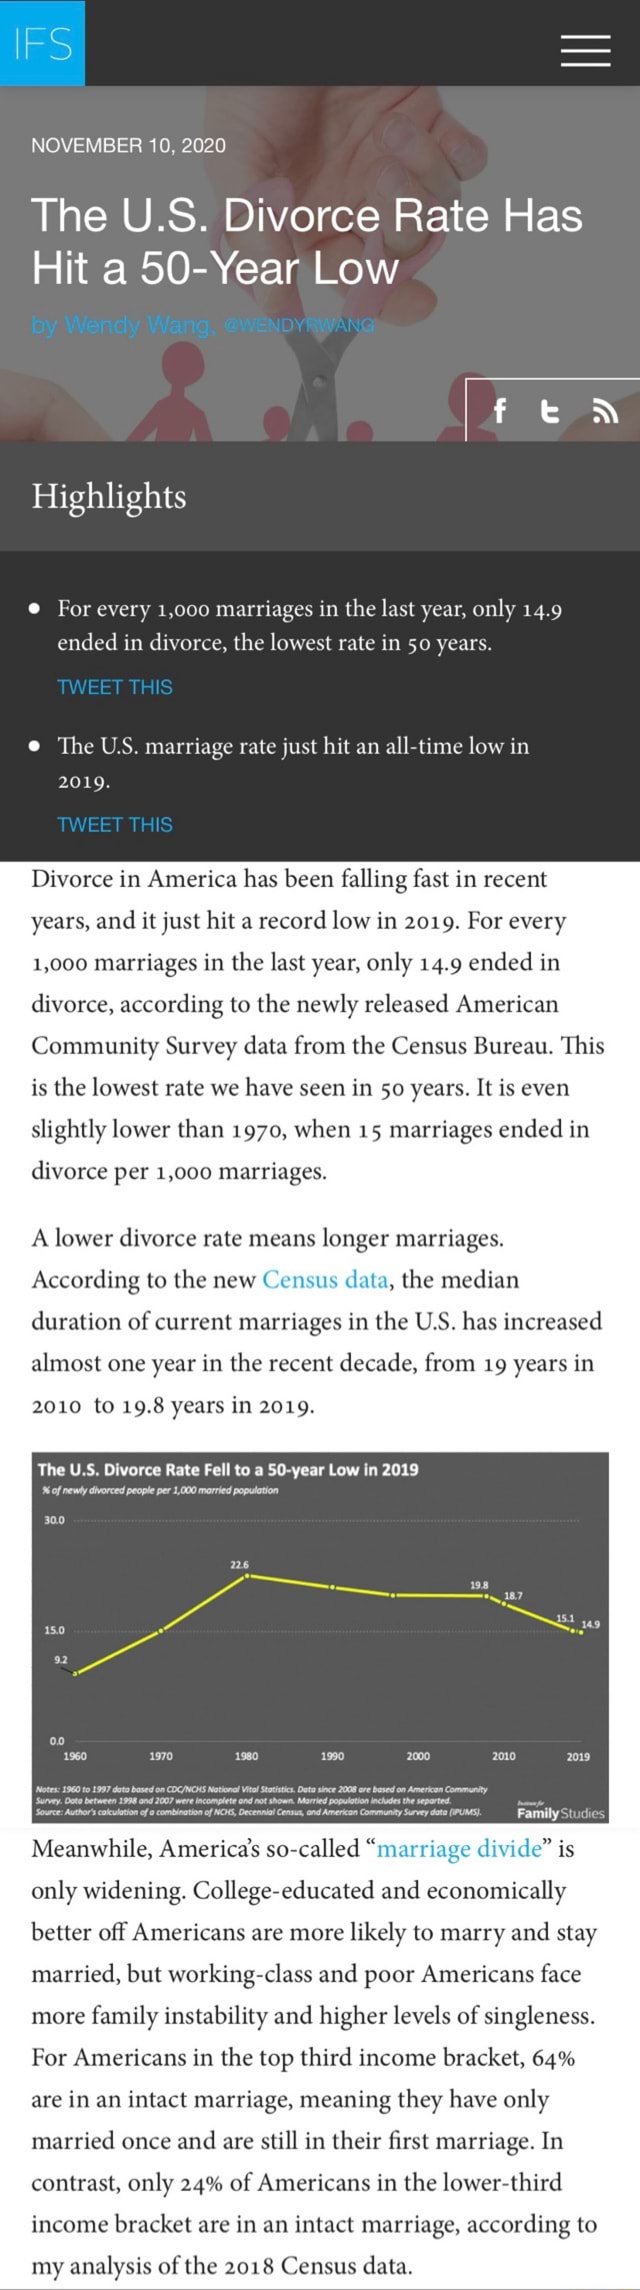 Ifs November 10 2020 The U S Divorce Rate Has Hit A 50